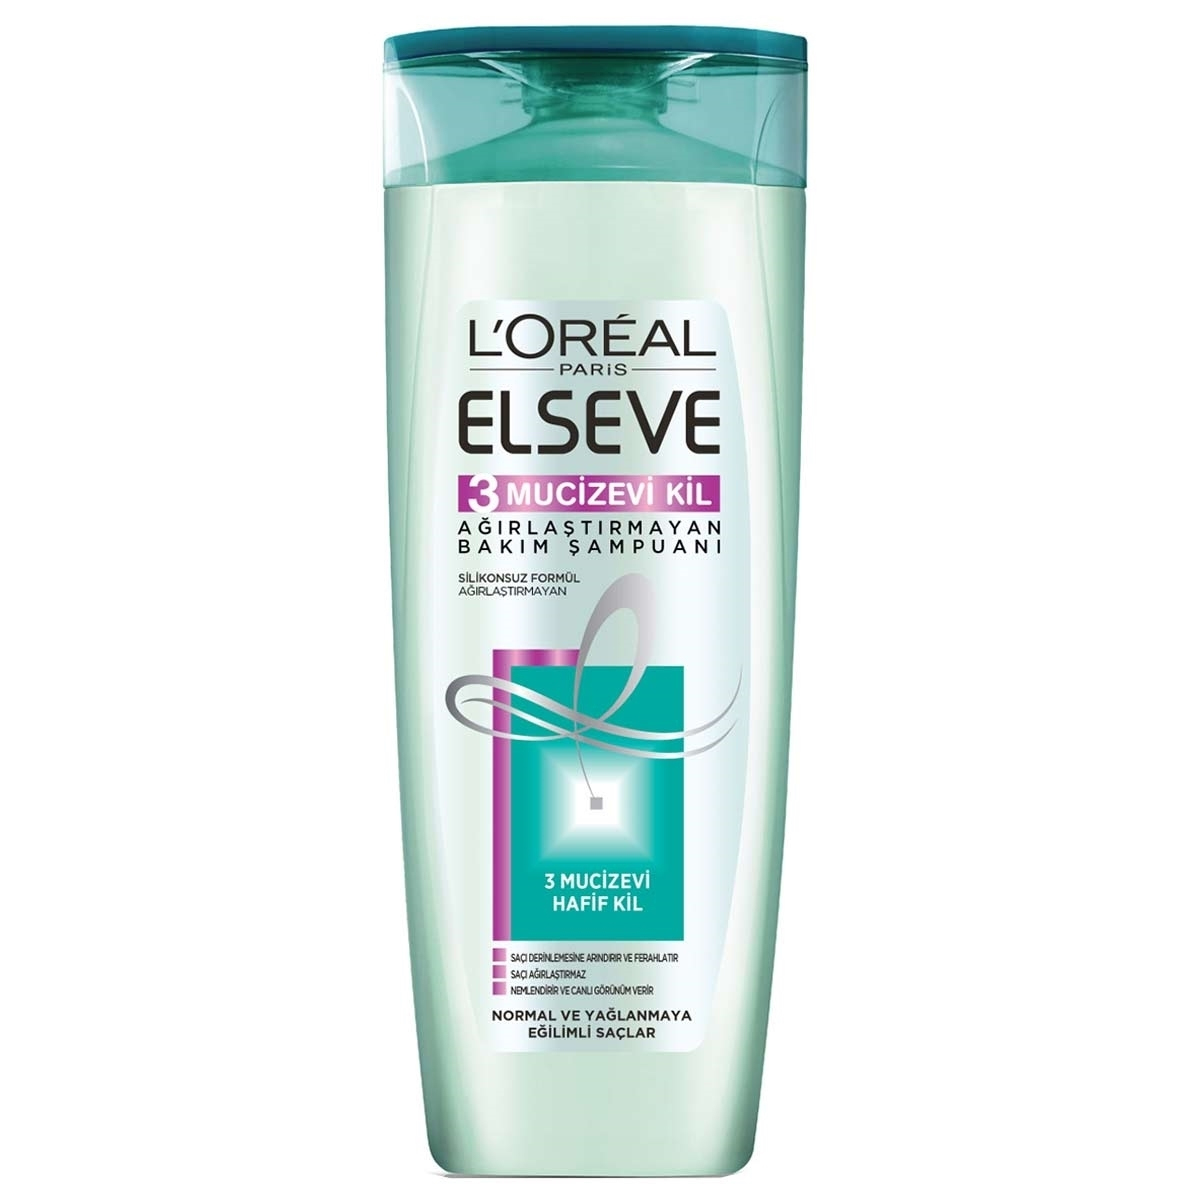 L'Oréal Elseve 3 Mucizevi Kil Şampuan 360 ml